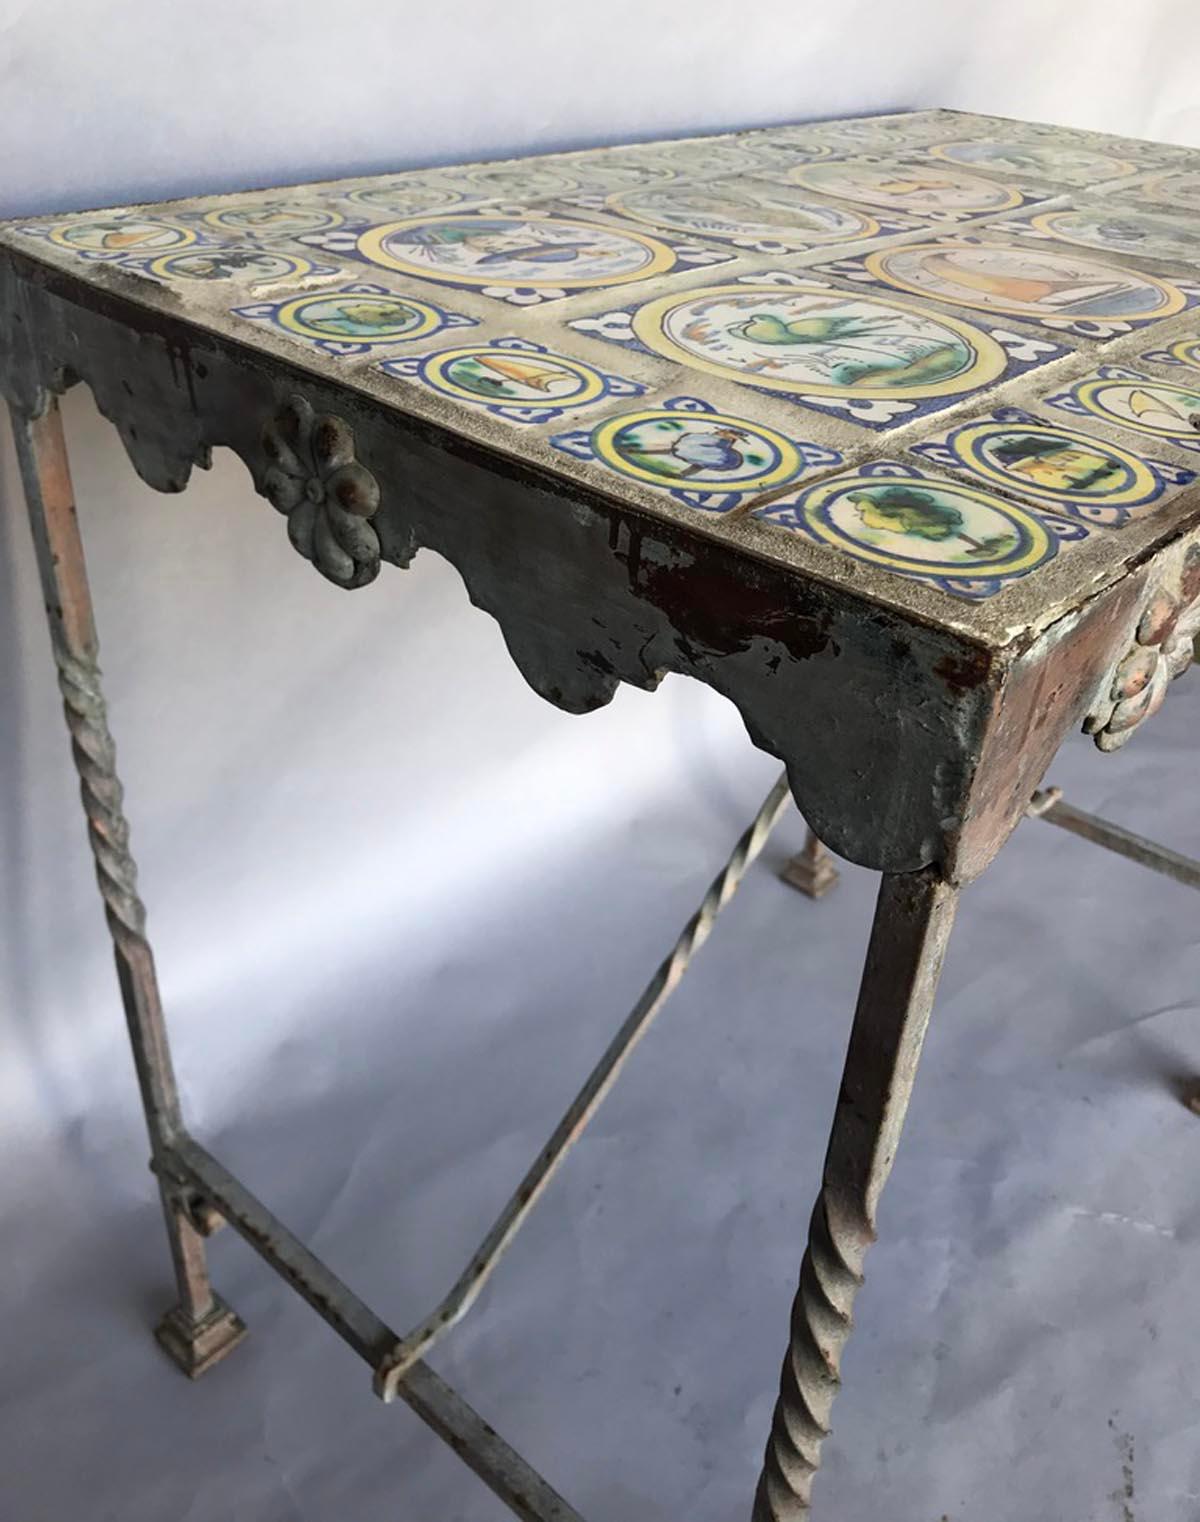 20th Century Iron Garden Table with Glazed Tile Top